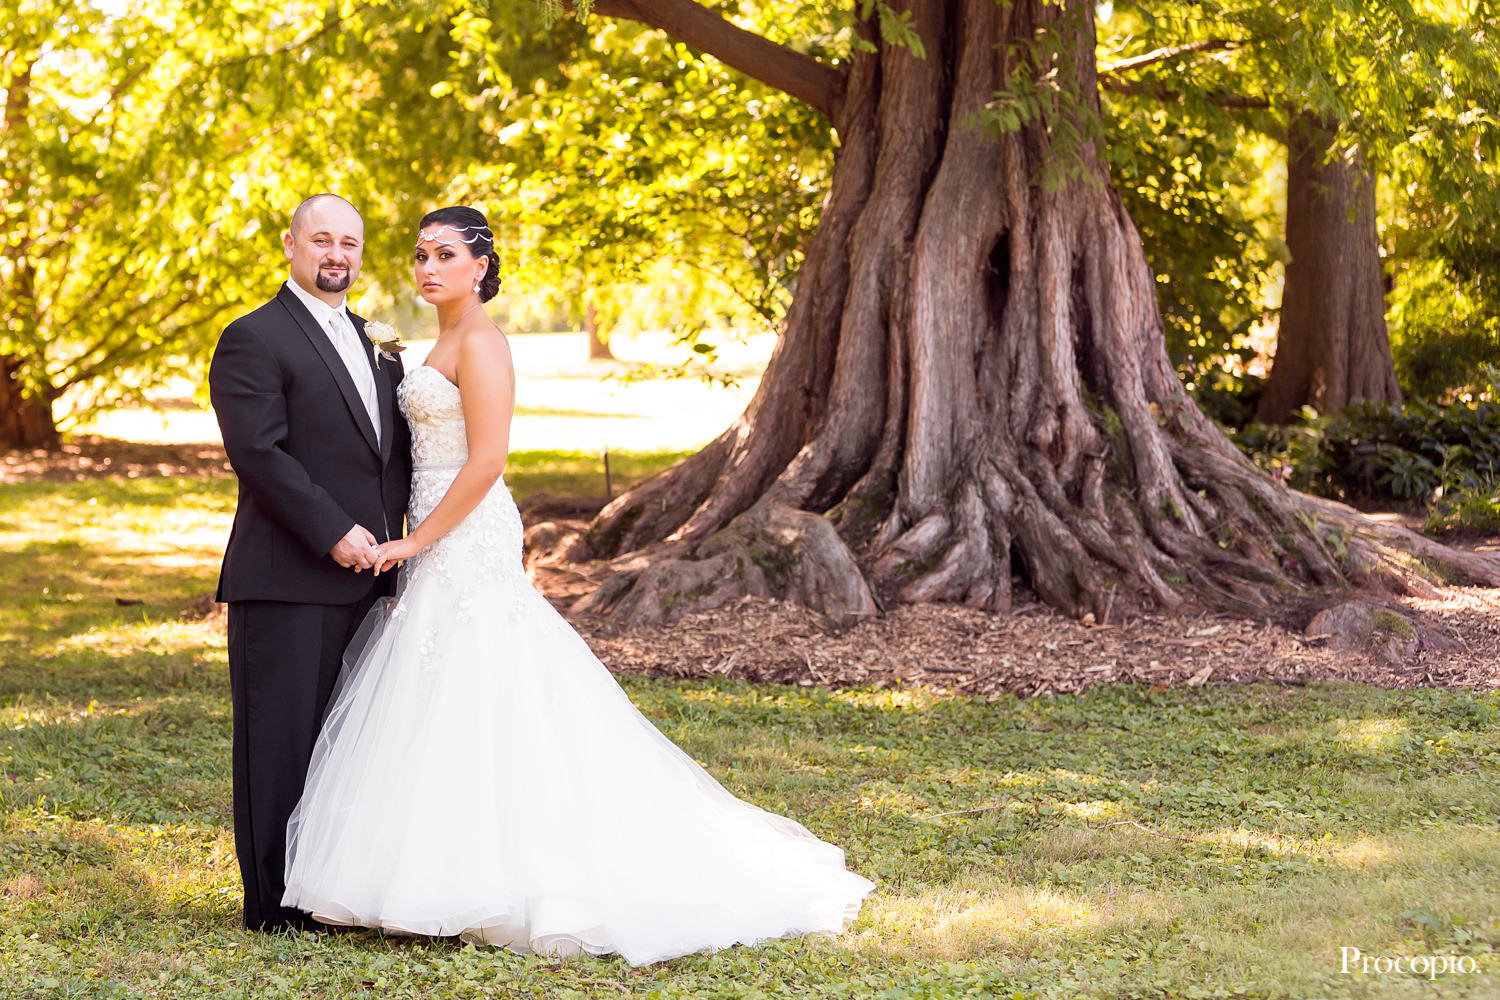 Procopio-Photography-Baltimore-Maryland-Wedding-For-The-Blog-Cylburn-Arboretum-000.jpg